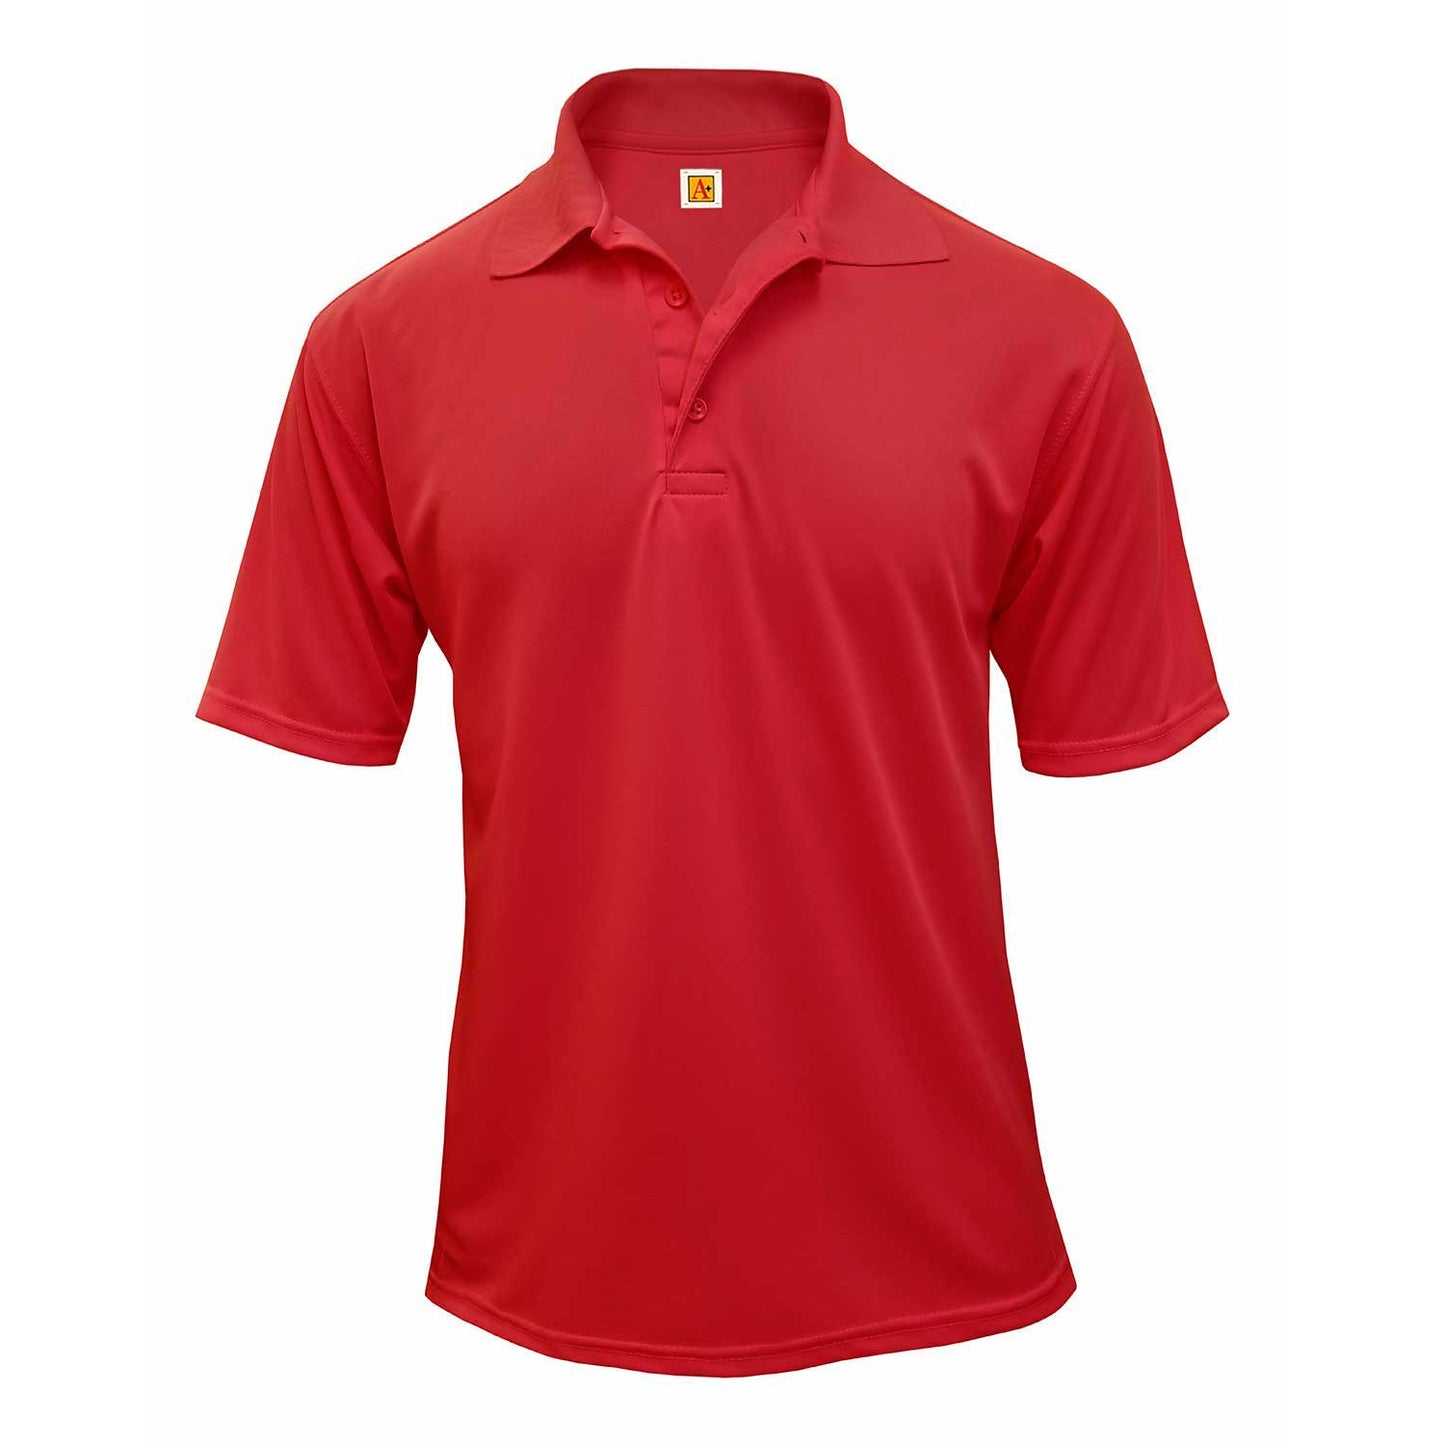 Performance Dri-fit Jersey Knit Short Sleeve Shirt (Unisex) w/Logo - 1121